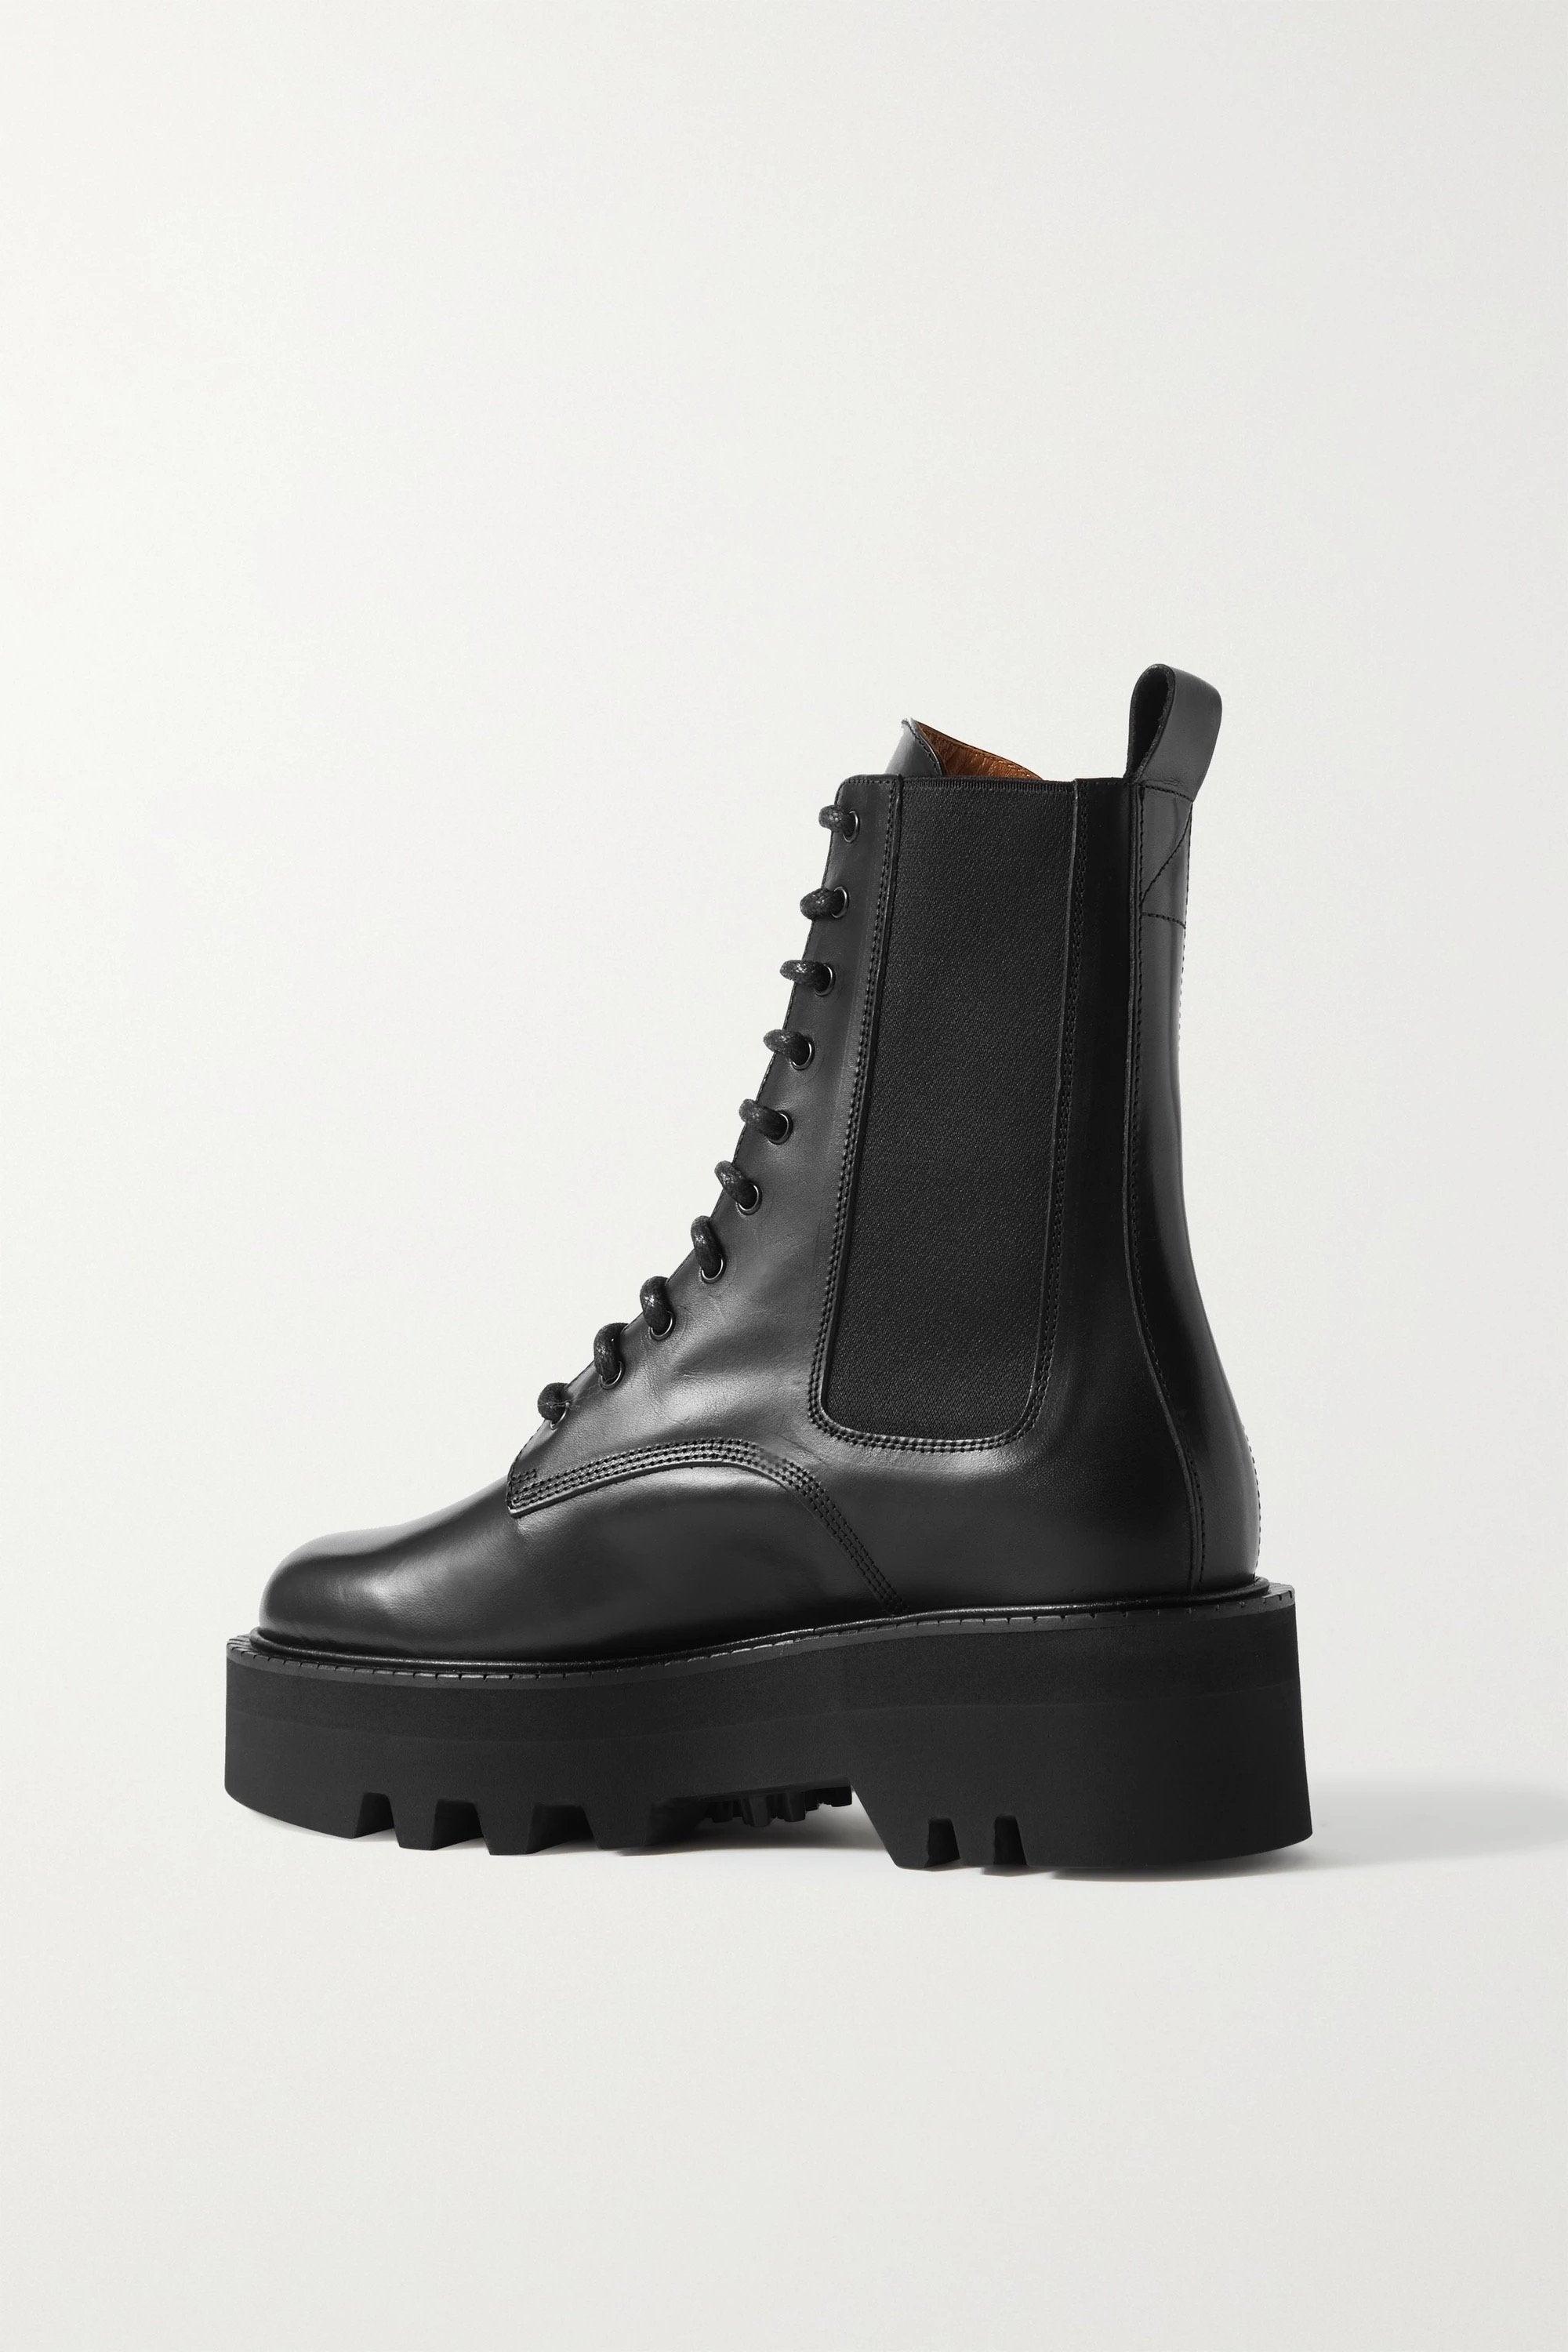 Pesaro Black Combat Boots 111323 - 7